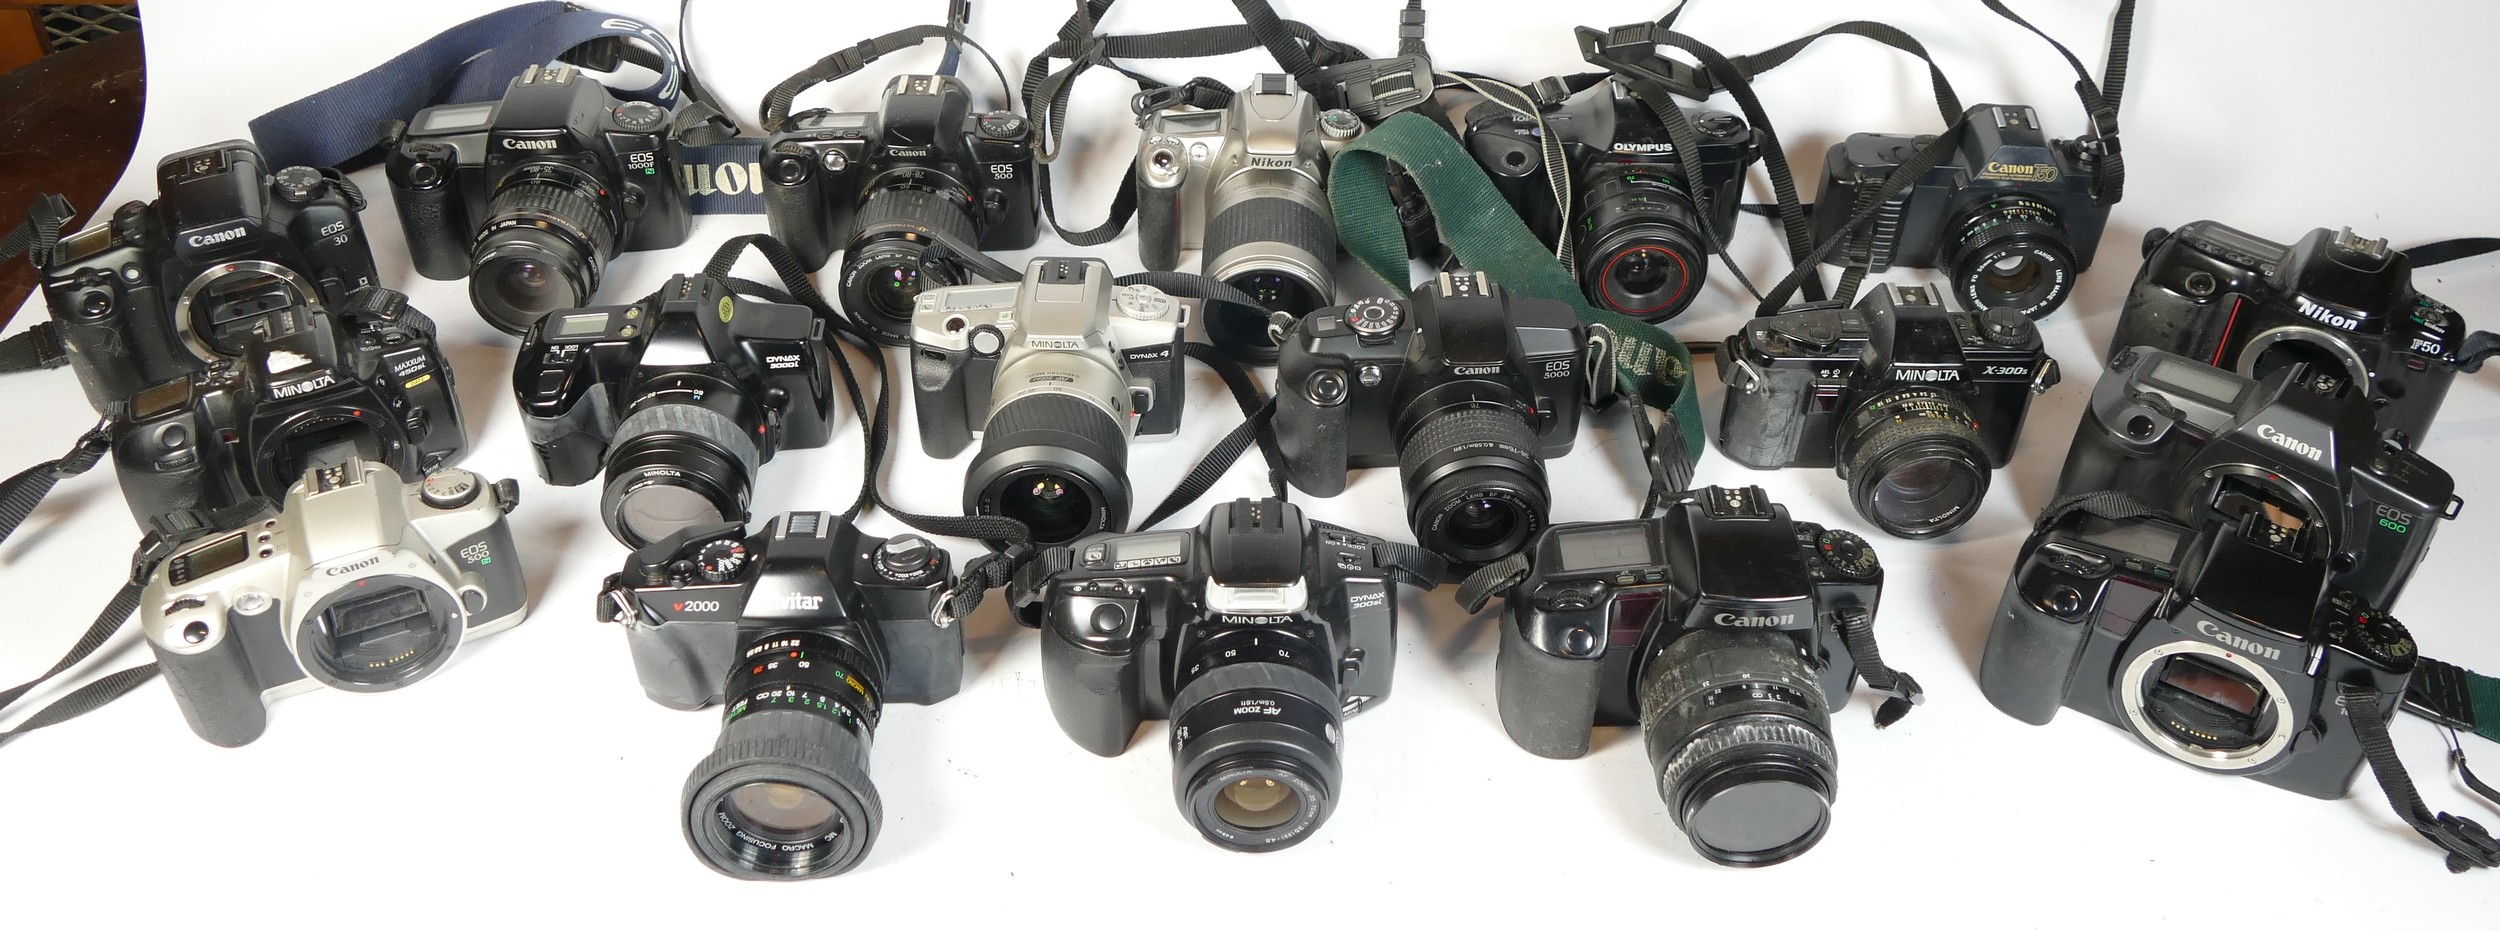 Twenty five SLR vintage film cameras to include a Canon EOS 100, a Canon EOS 500, a Minolta 7000 and